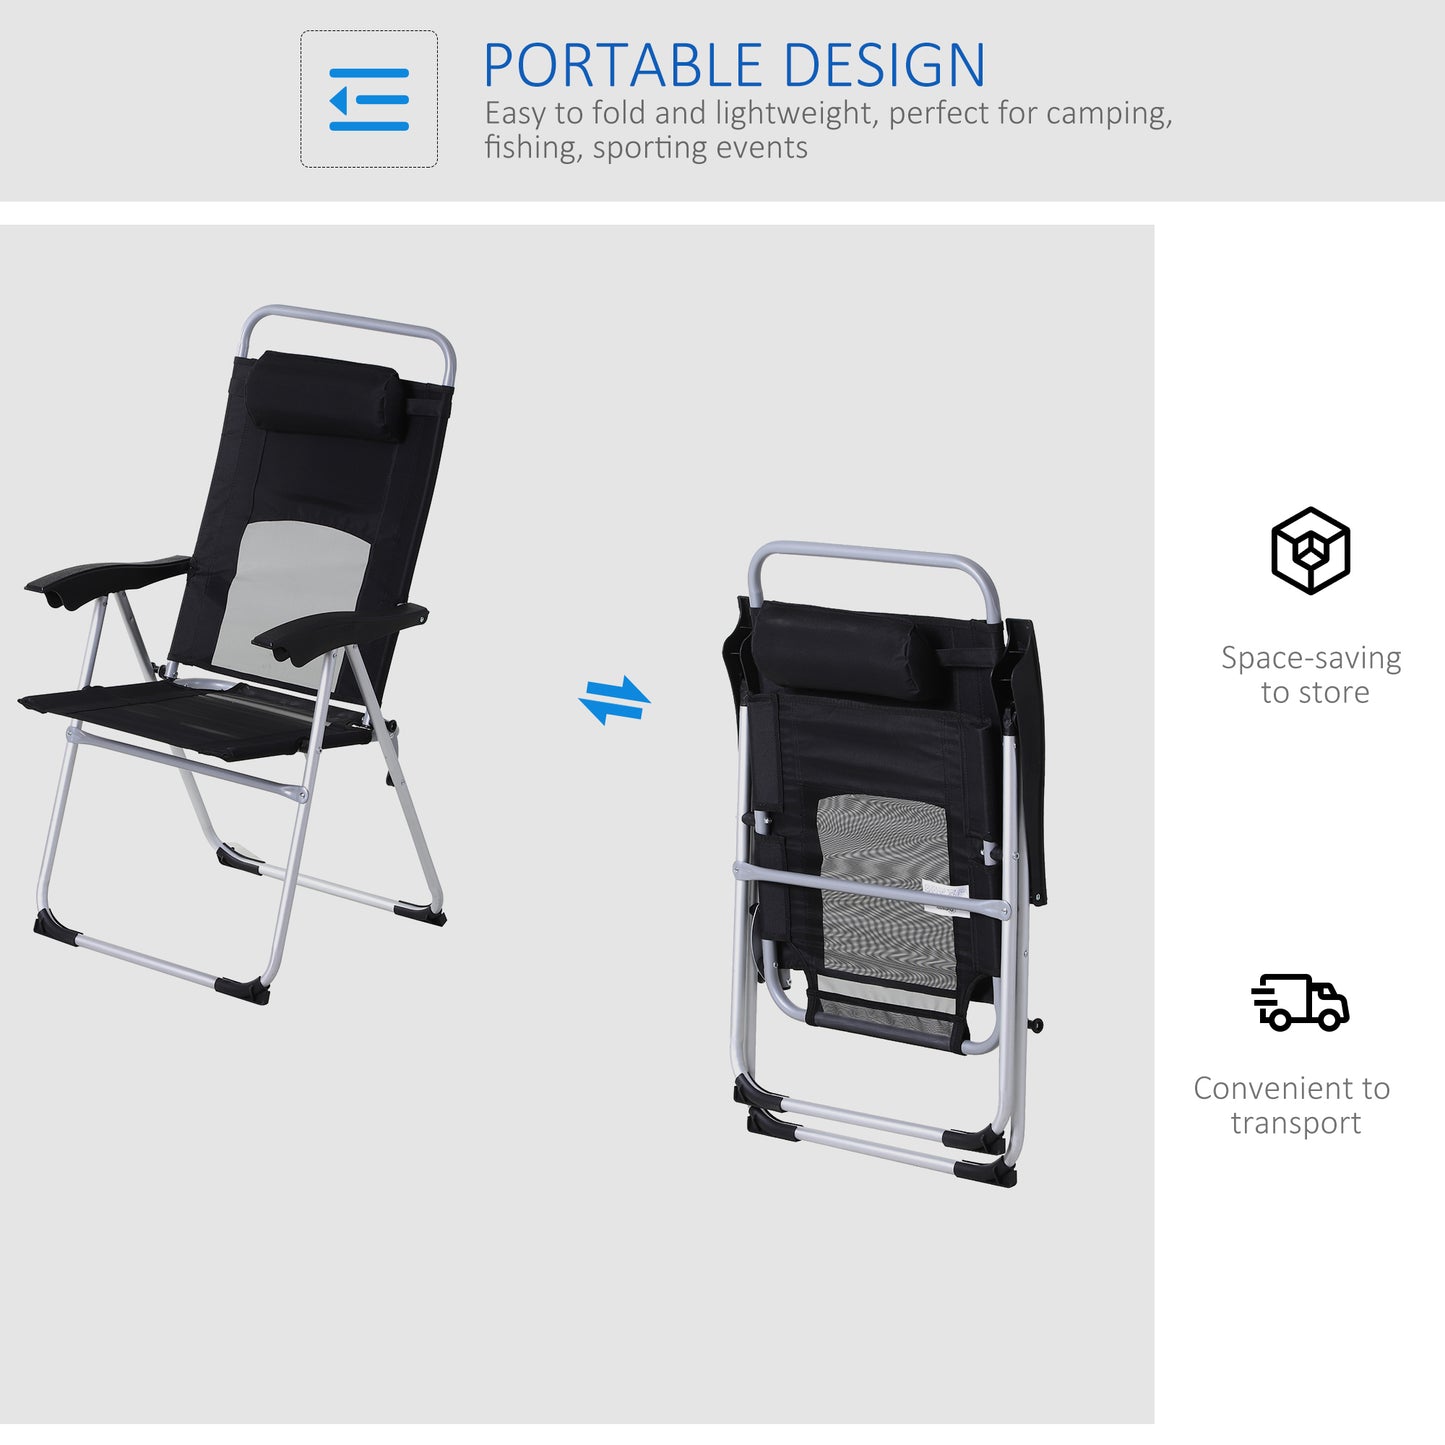 Outsunny Metal Frame 3-Position Adjustable Outdoor Garden Chair w/ Headrest Black